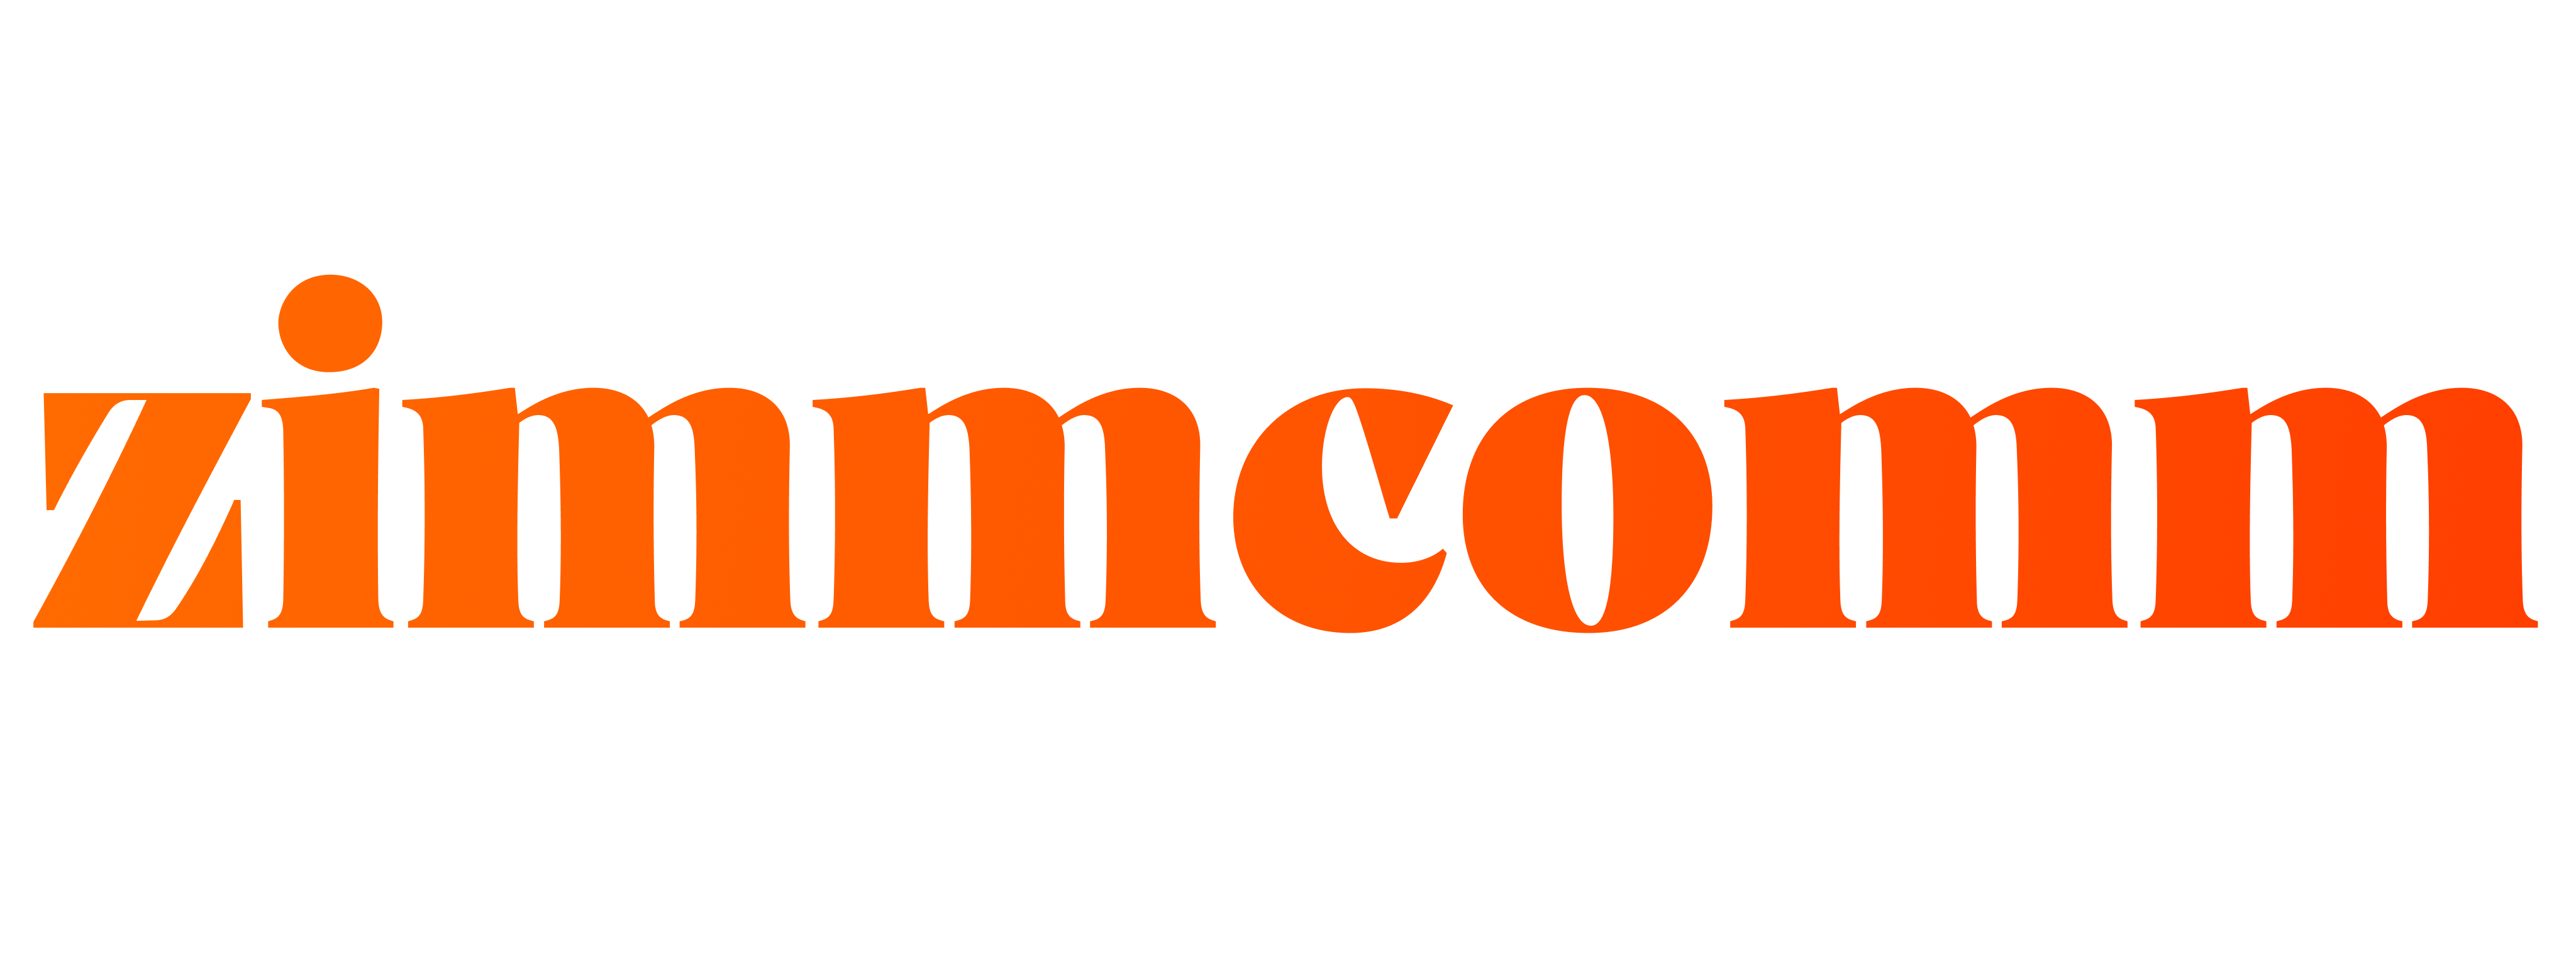 zimmcomm logo